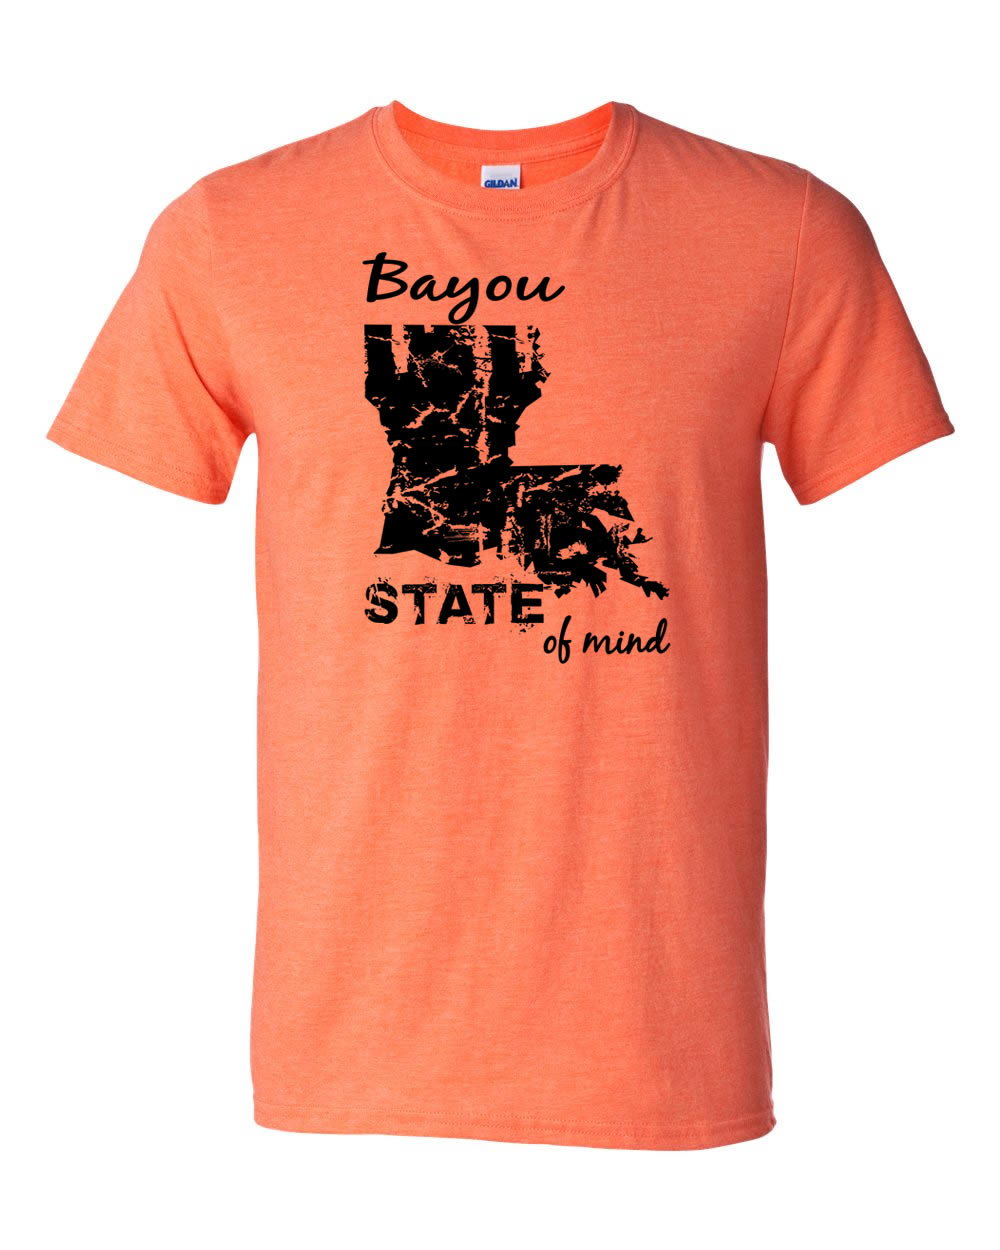 Orange: Bayou State of Mind